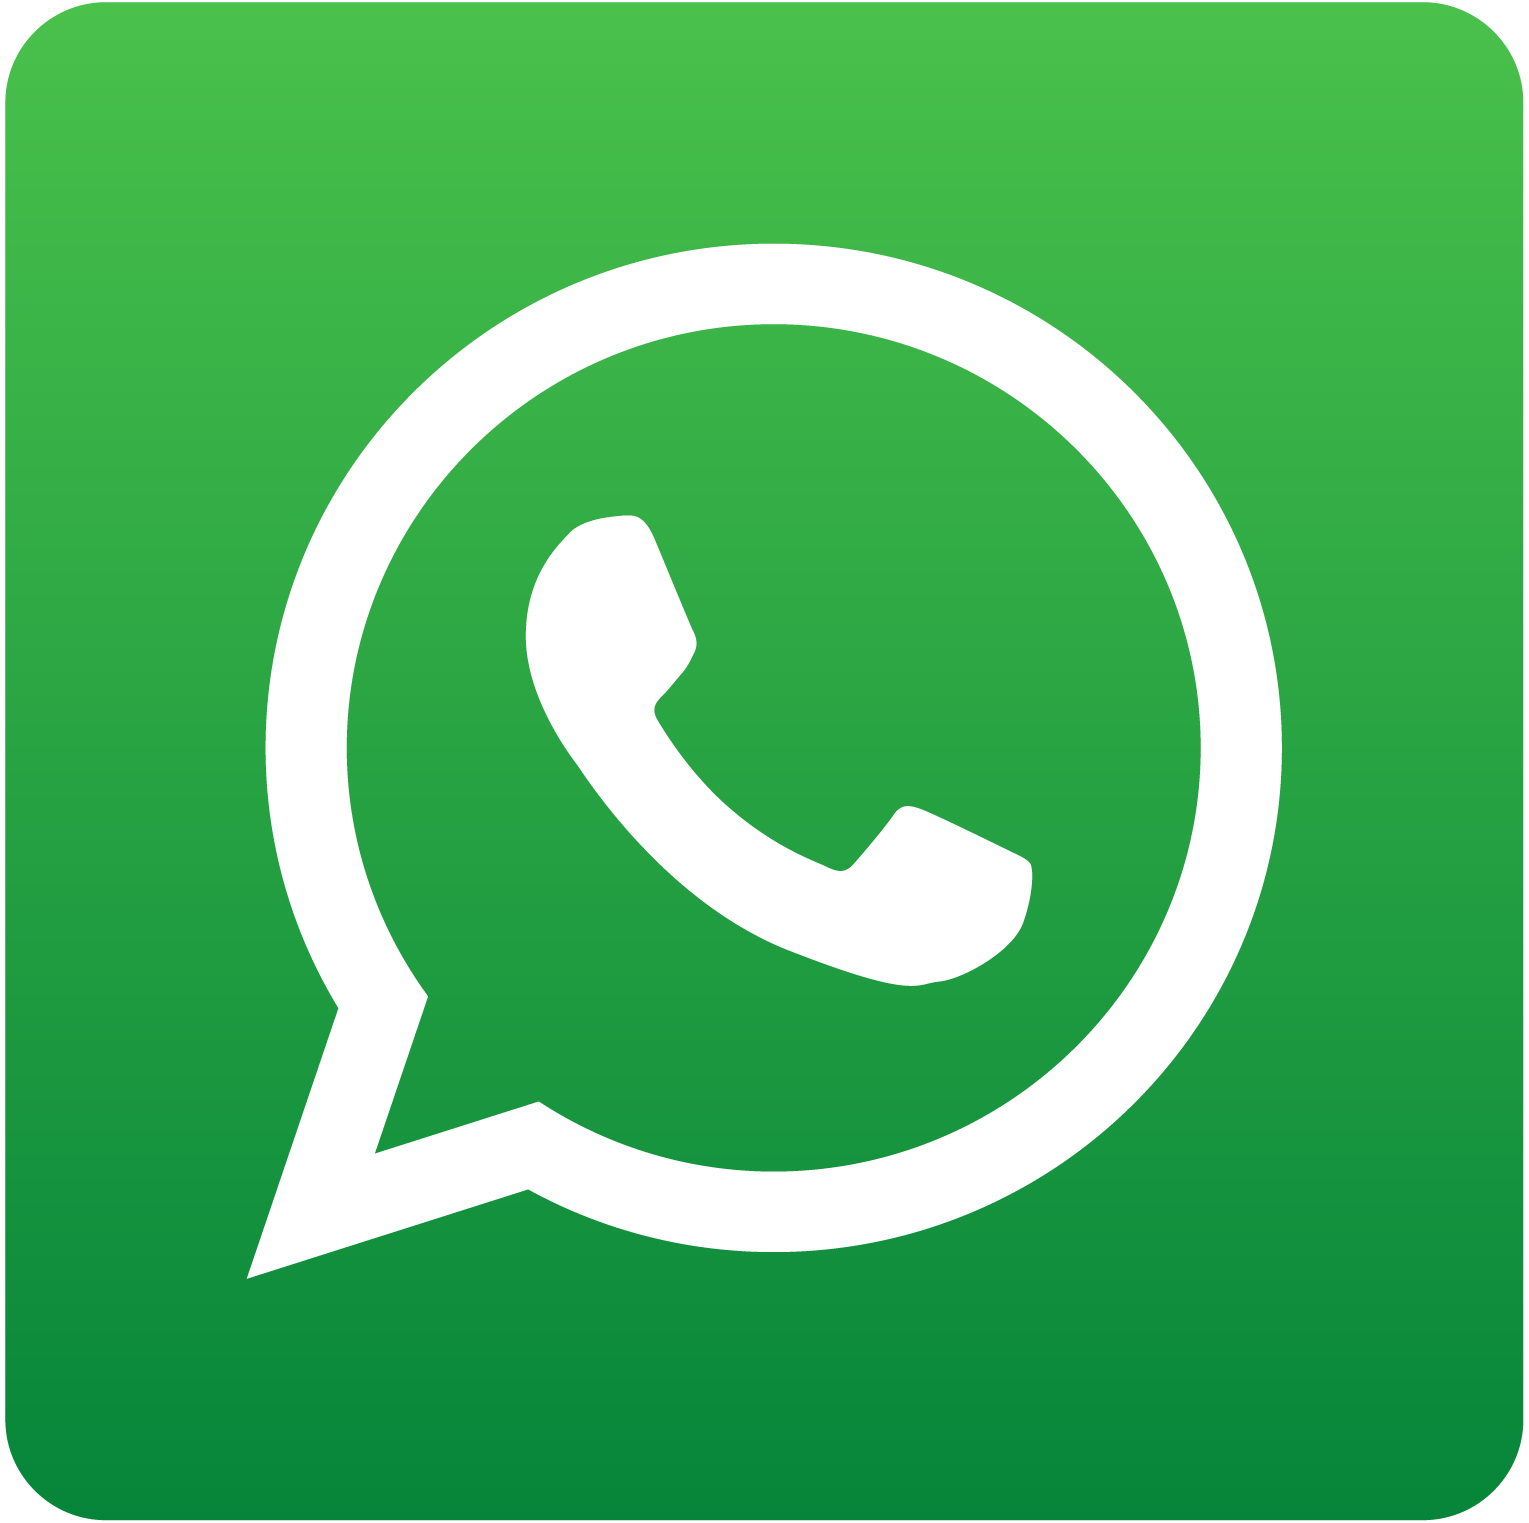 logotipo whatsapp